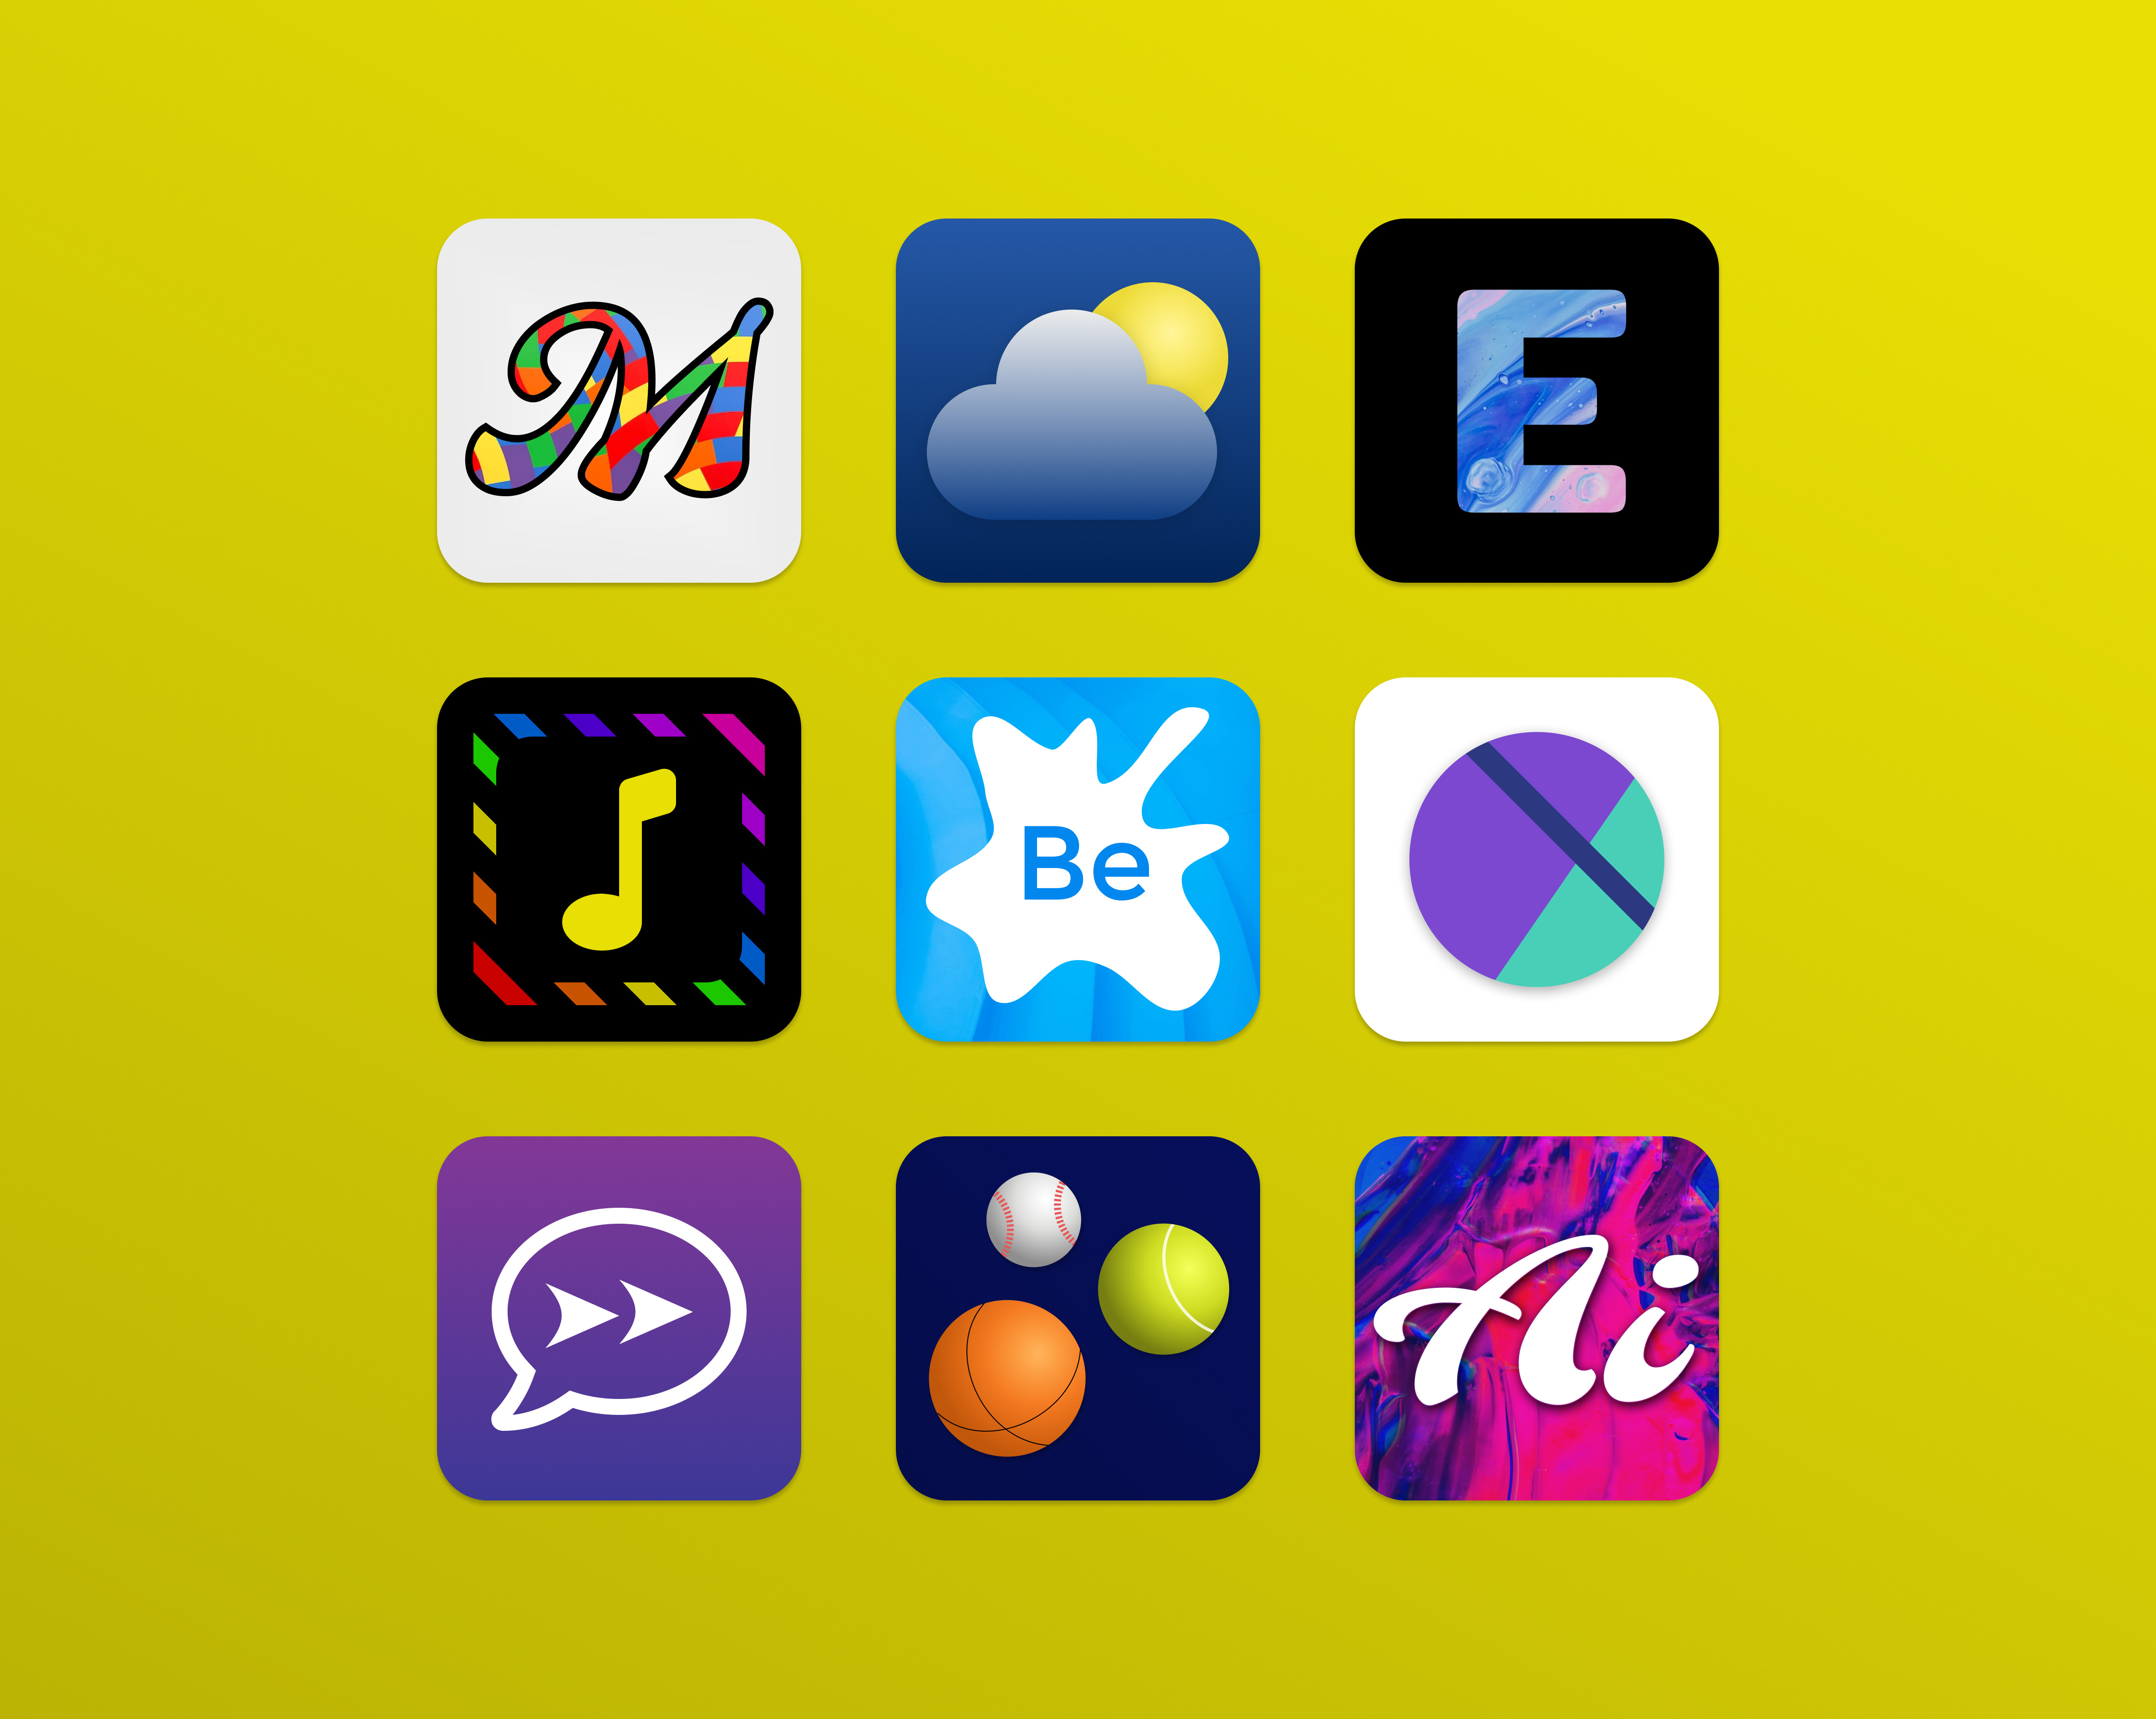 Daily UI 005 - App Icons